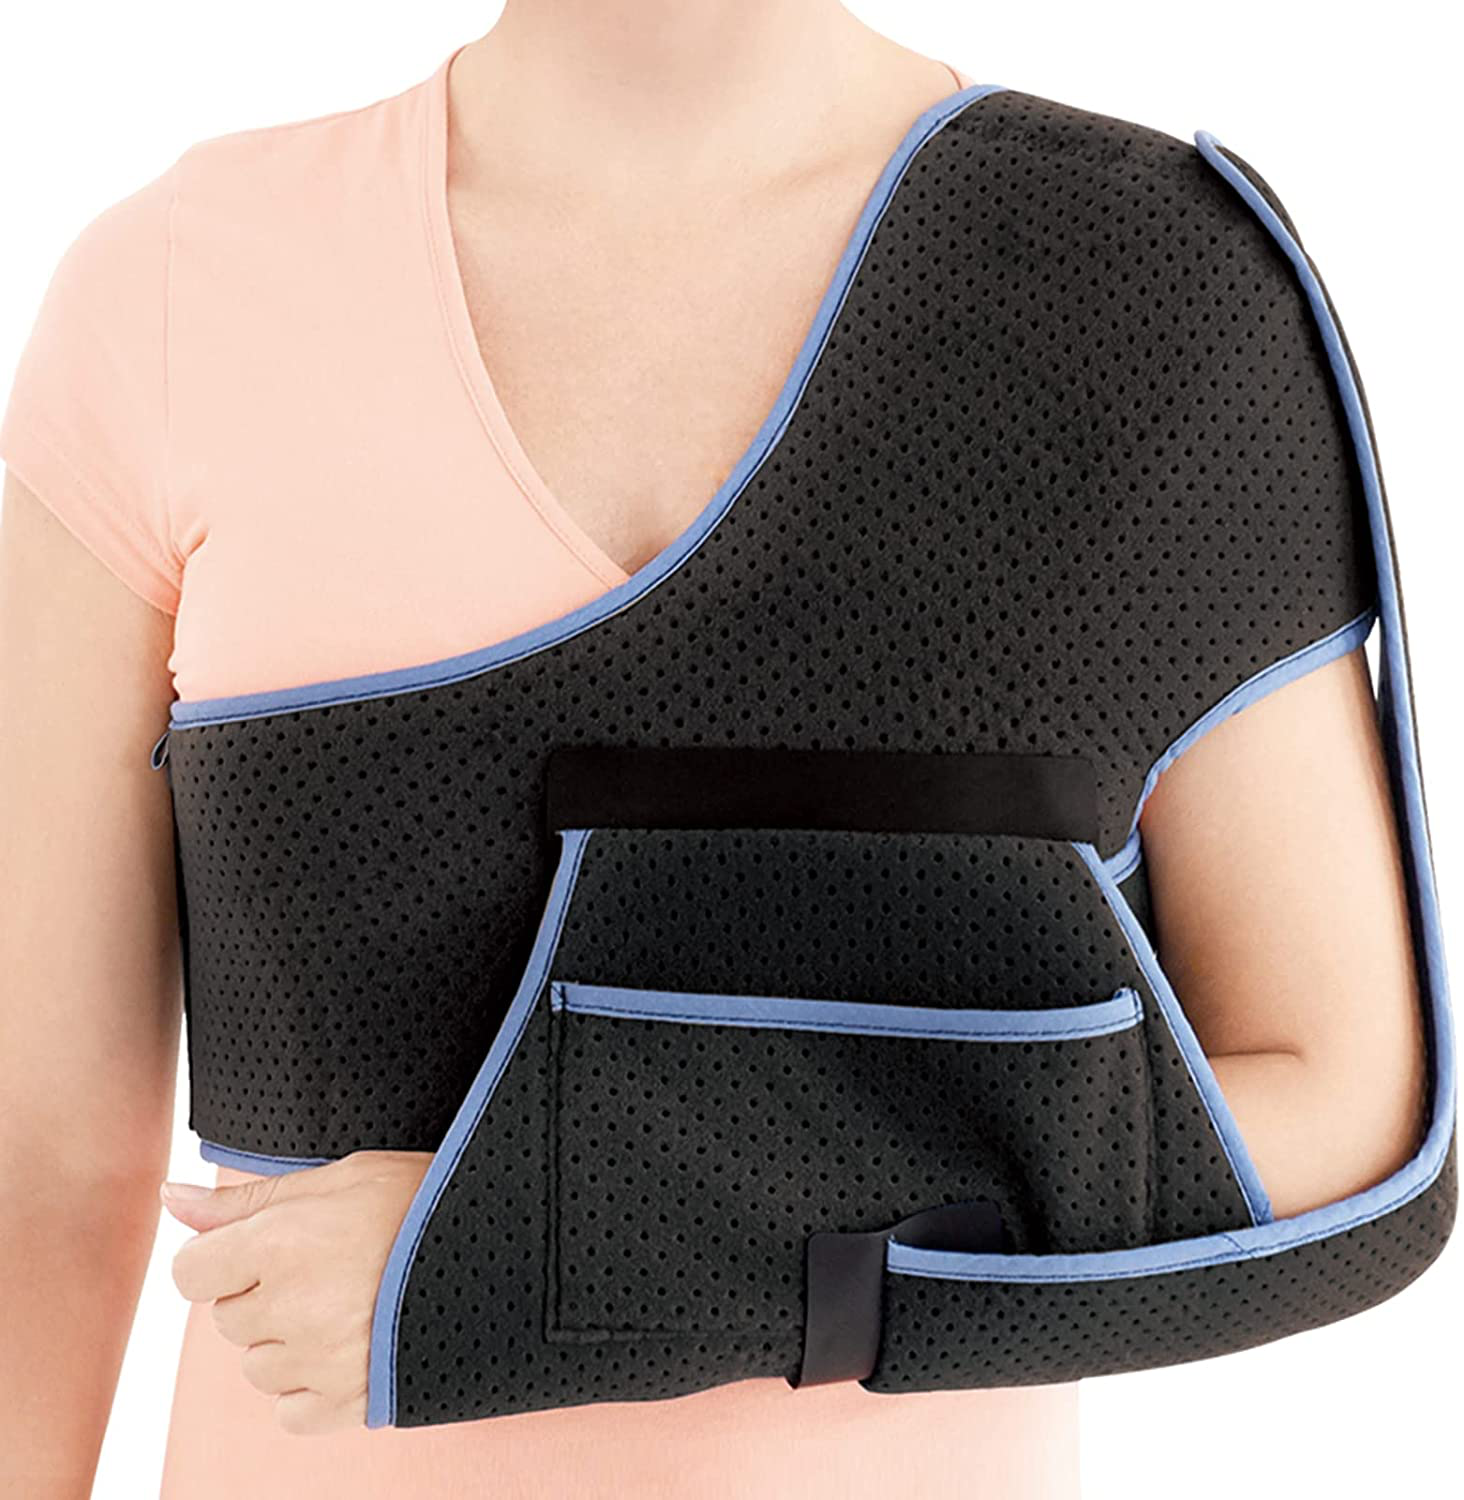 Arm Sling Shoulder Brace, Men & Women - Immobilizer for Injury Pain Re